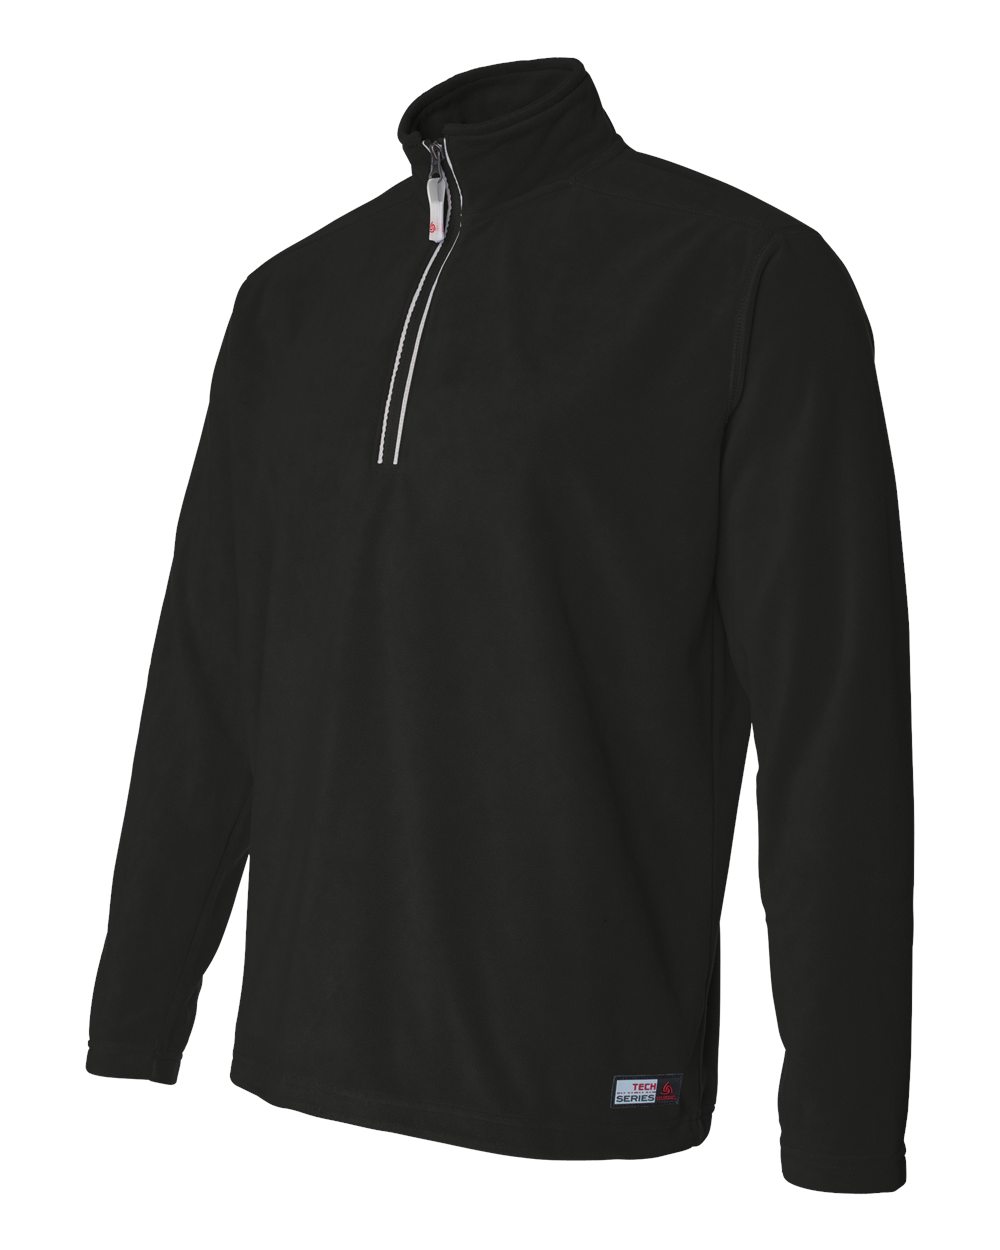 Colorado Clothing 6196 Lightweight Microfleece 1/4 Zip Pullover